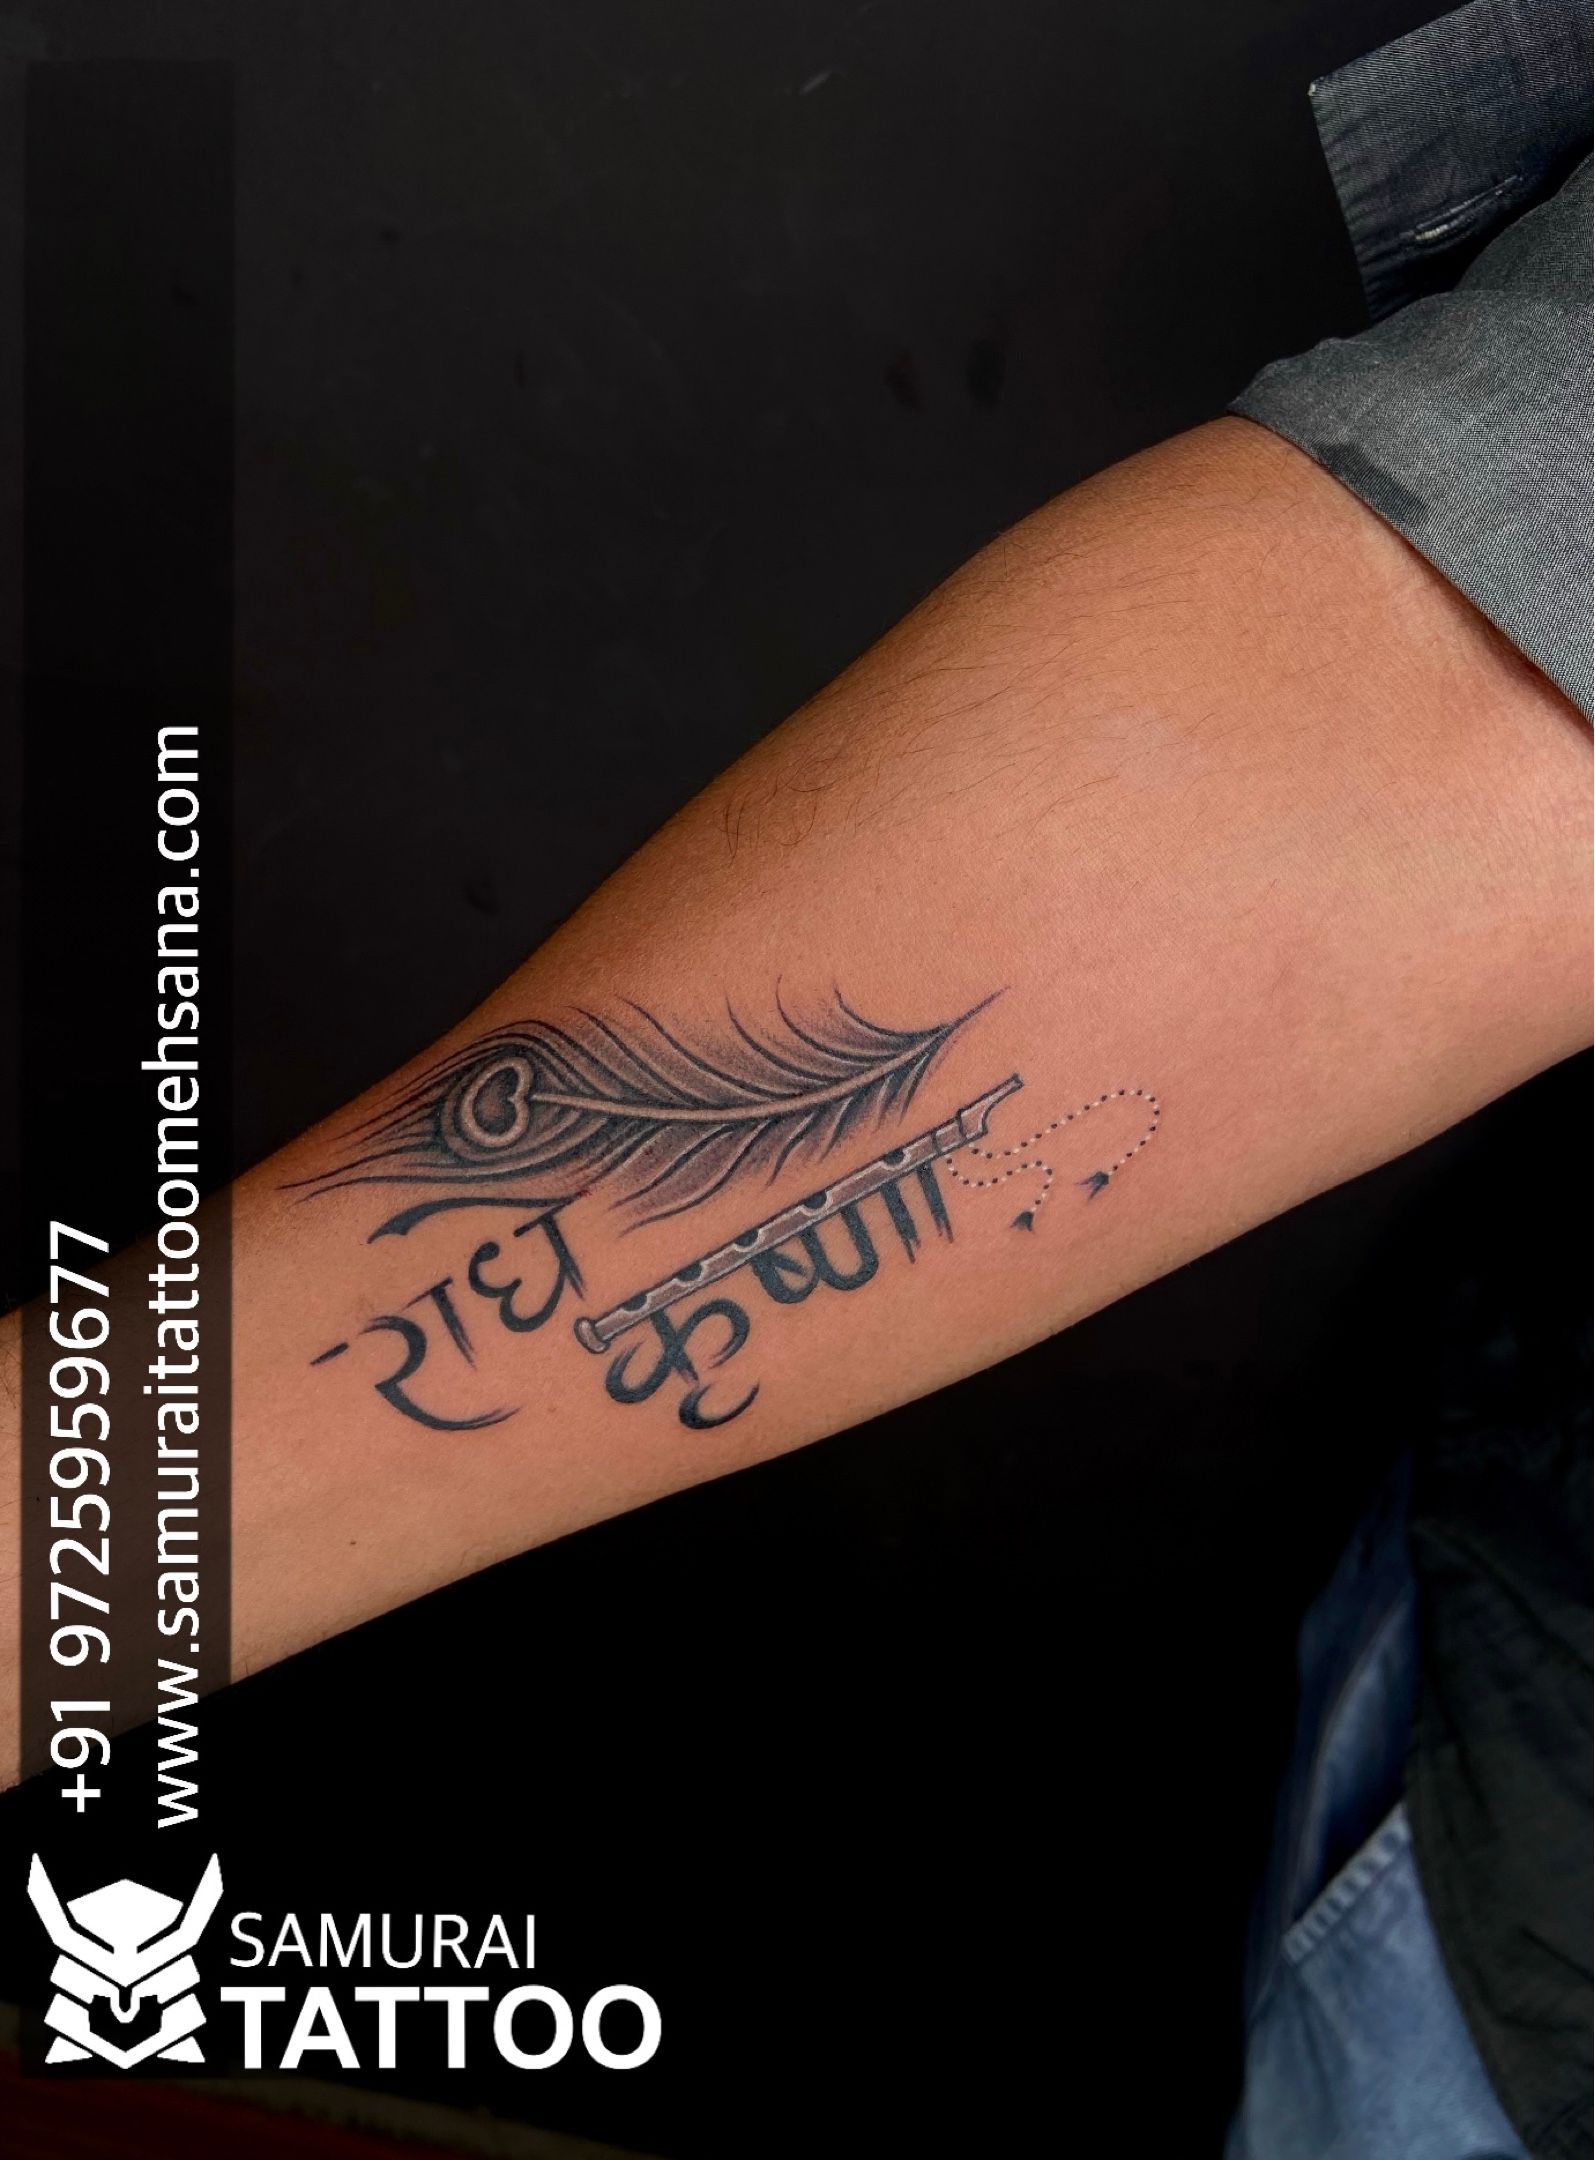 Harsh Tattoos  Radhe Krishna with Peacock feather tattoo design Done  for my Mom     9691075458   radhekrishna krishna radheradhe  krishnatattoo tattoo inkart ink artist art insta tattooidea  harshtattoos harshtattoo durg 